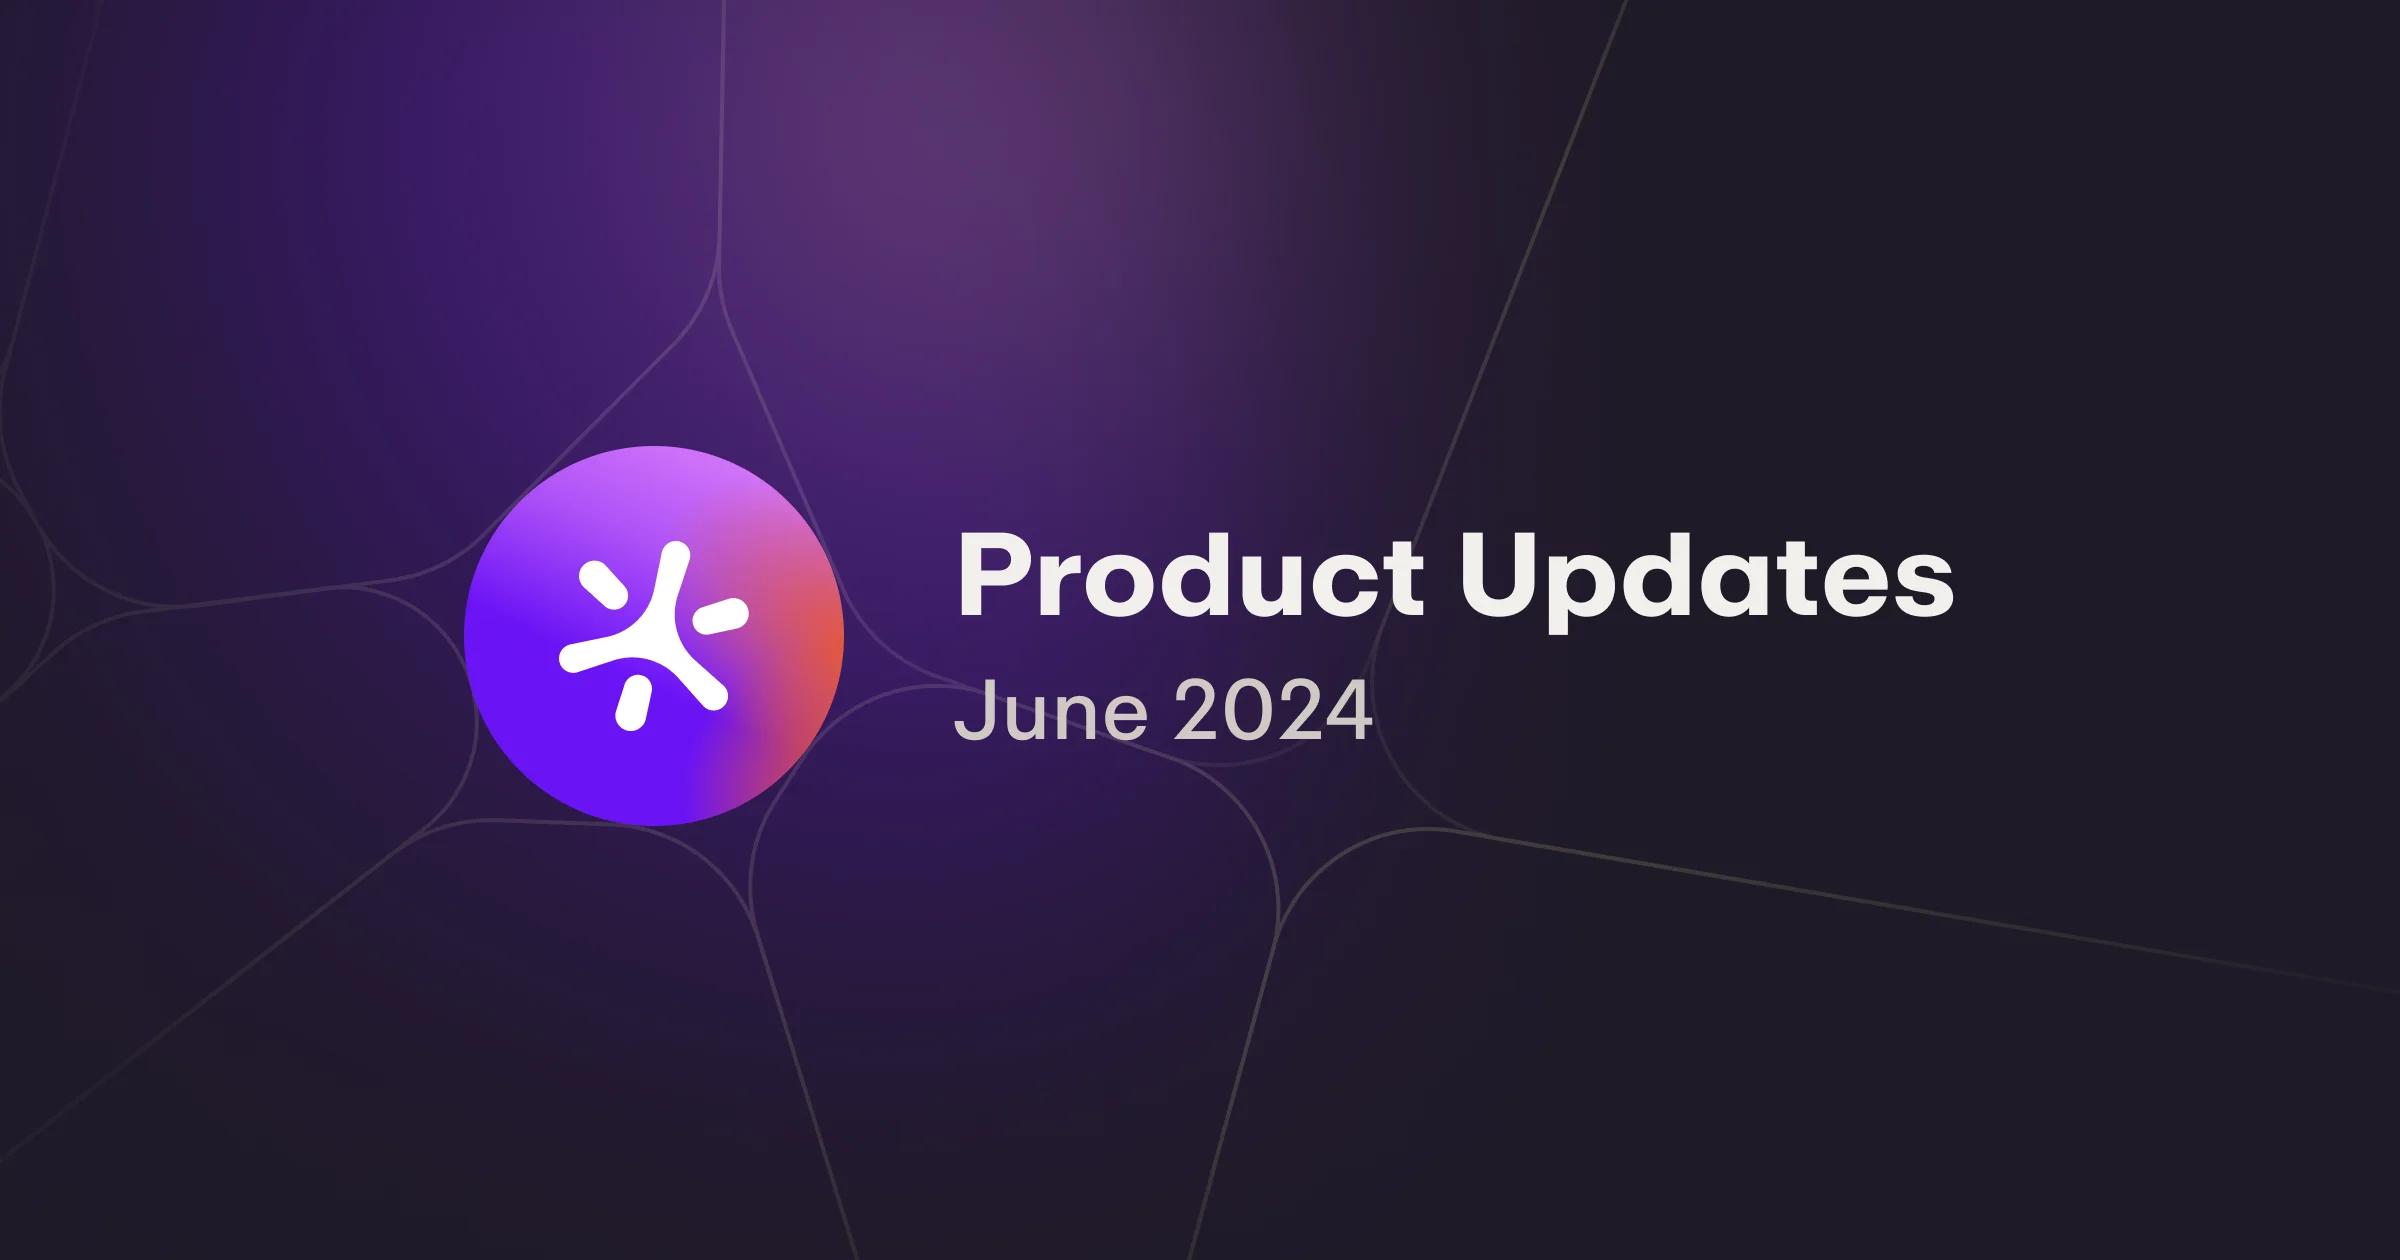 June '24 Product Update